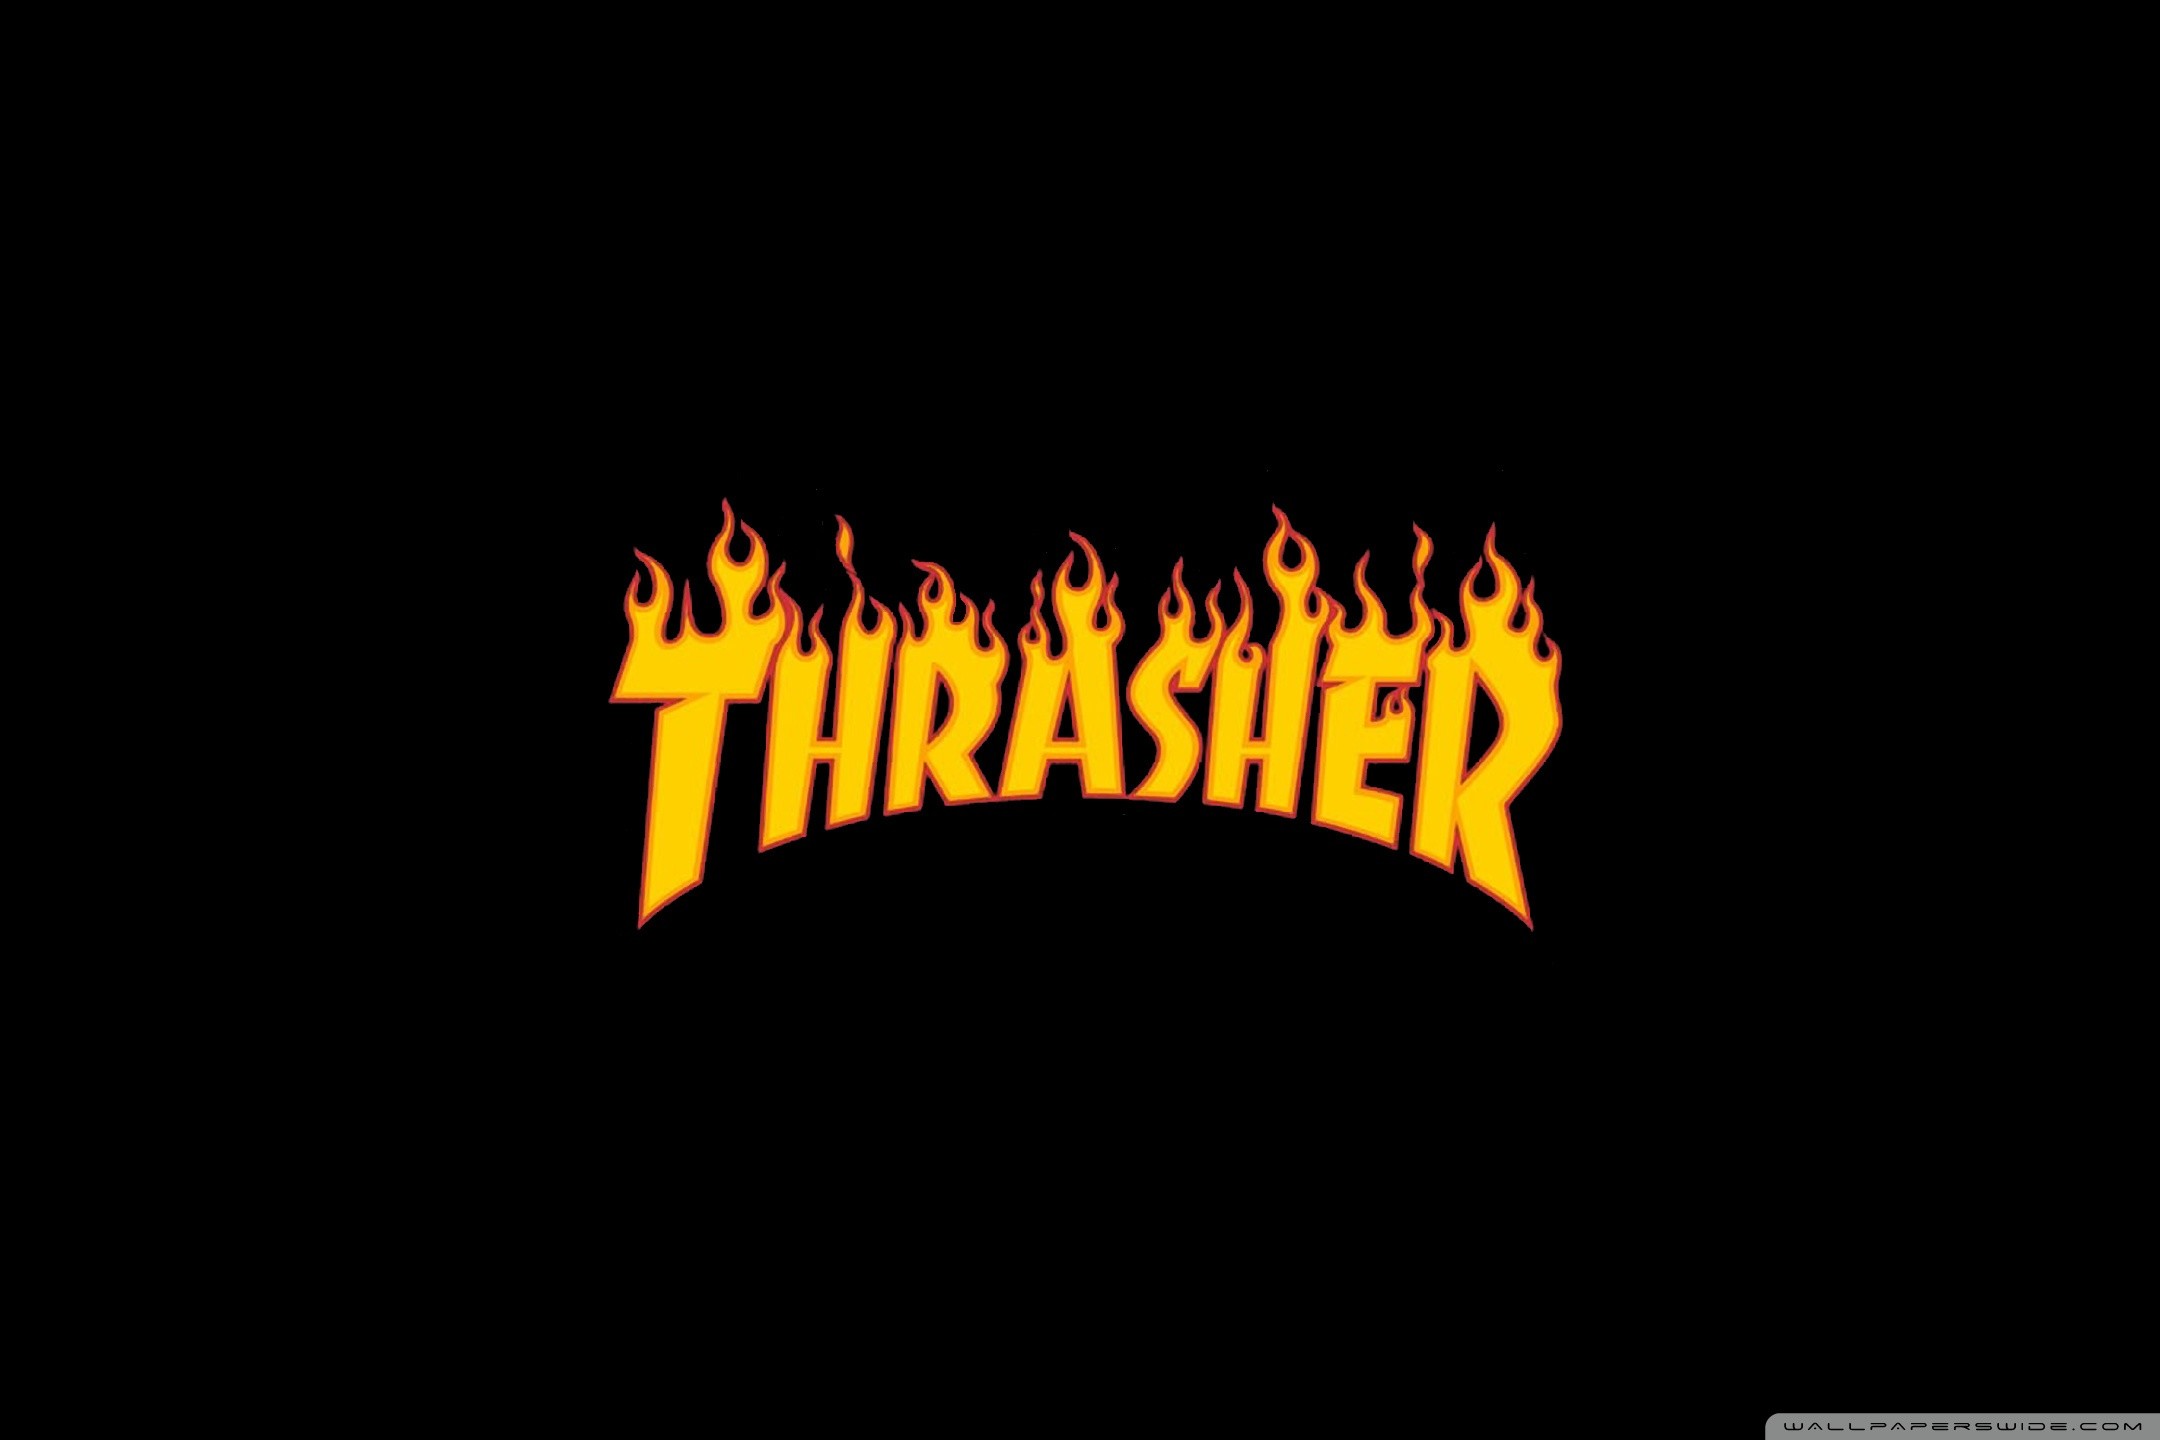 thrasher magazine wallpaper,text,logo,font,graphic design,flame